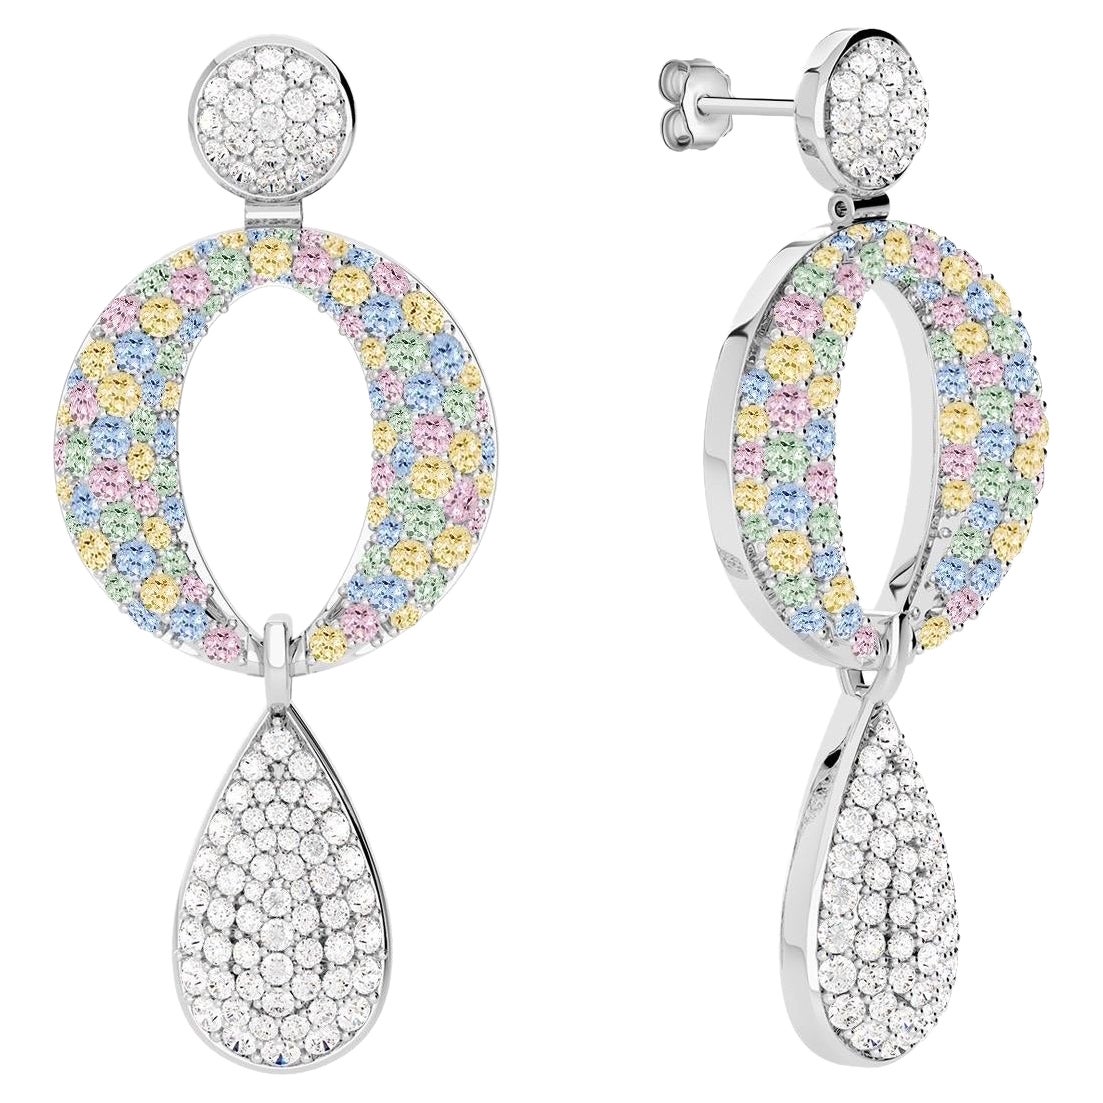 Ruben Manuel “Spring” Earrings.  18K WG Diamond and Sapphire “Spring” Earrings. For Sale